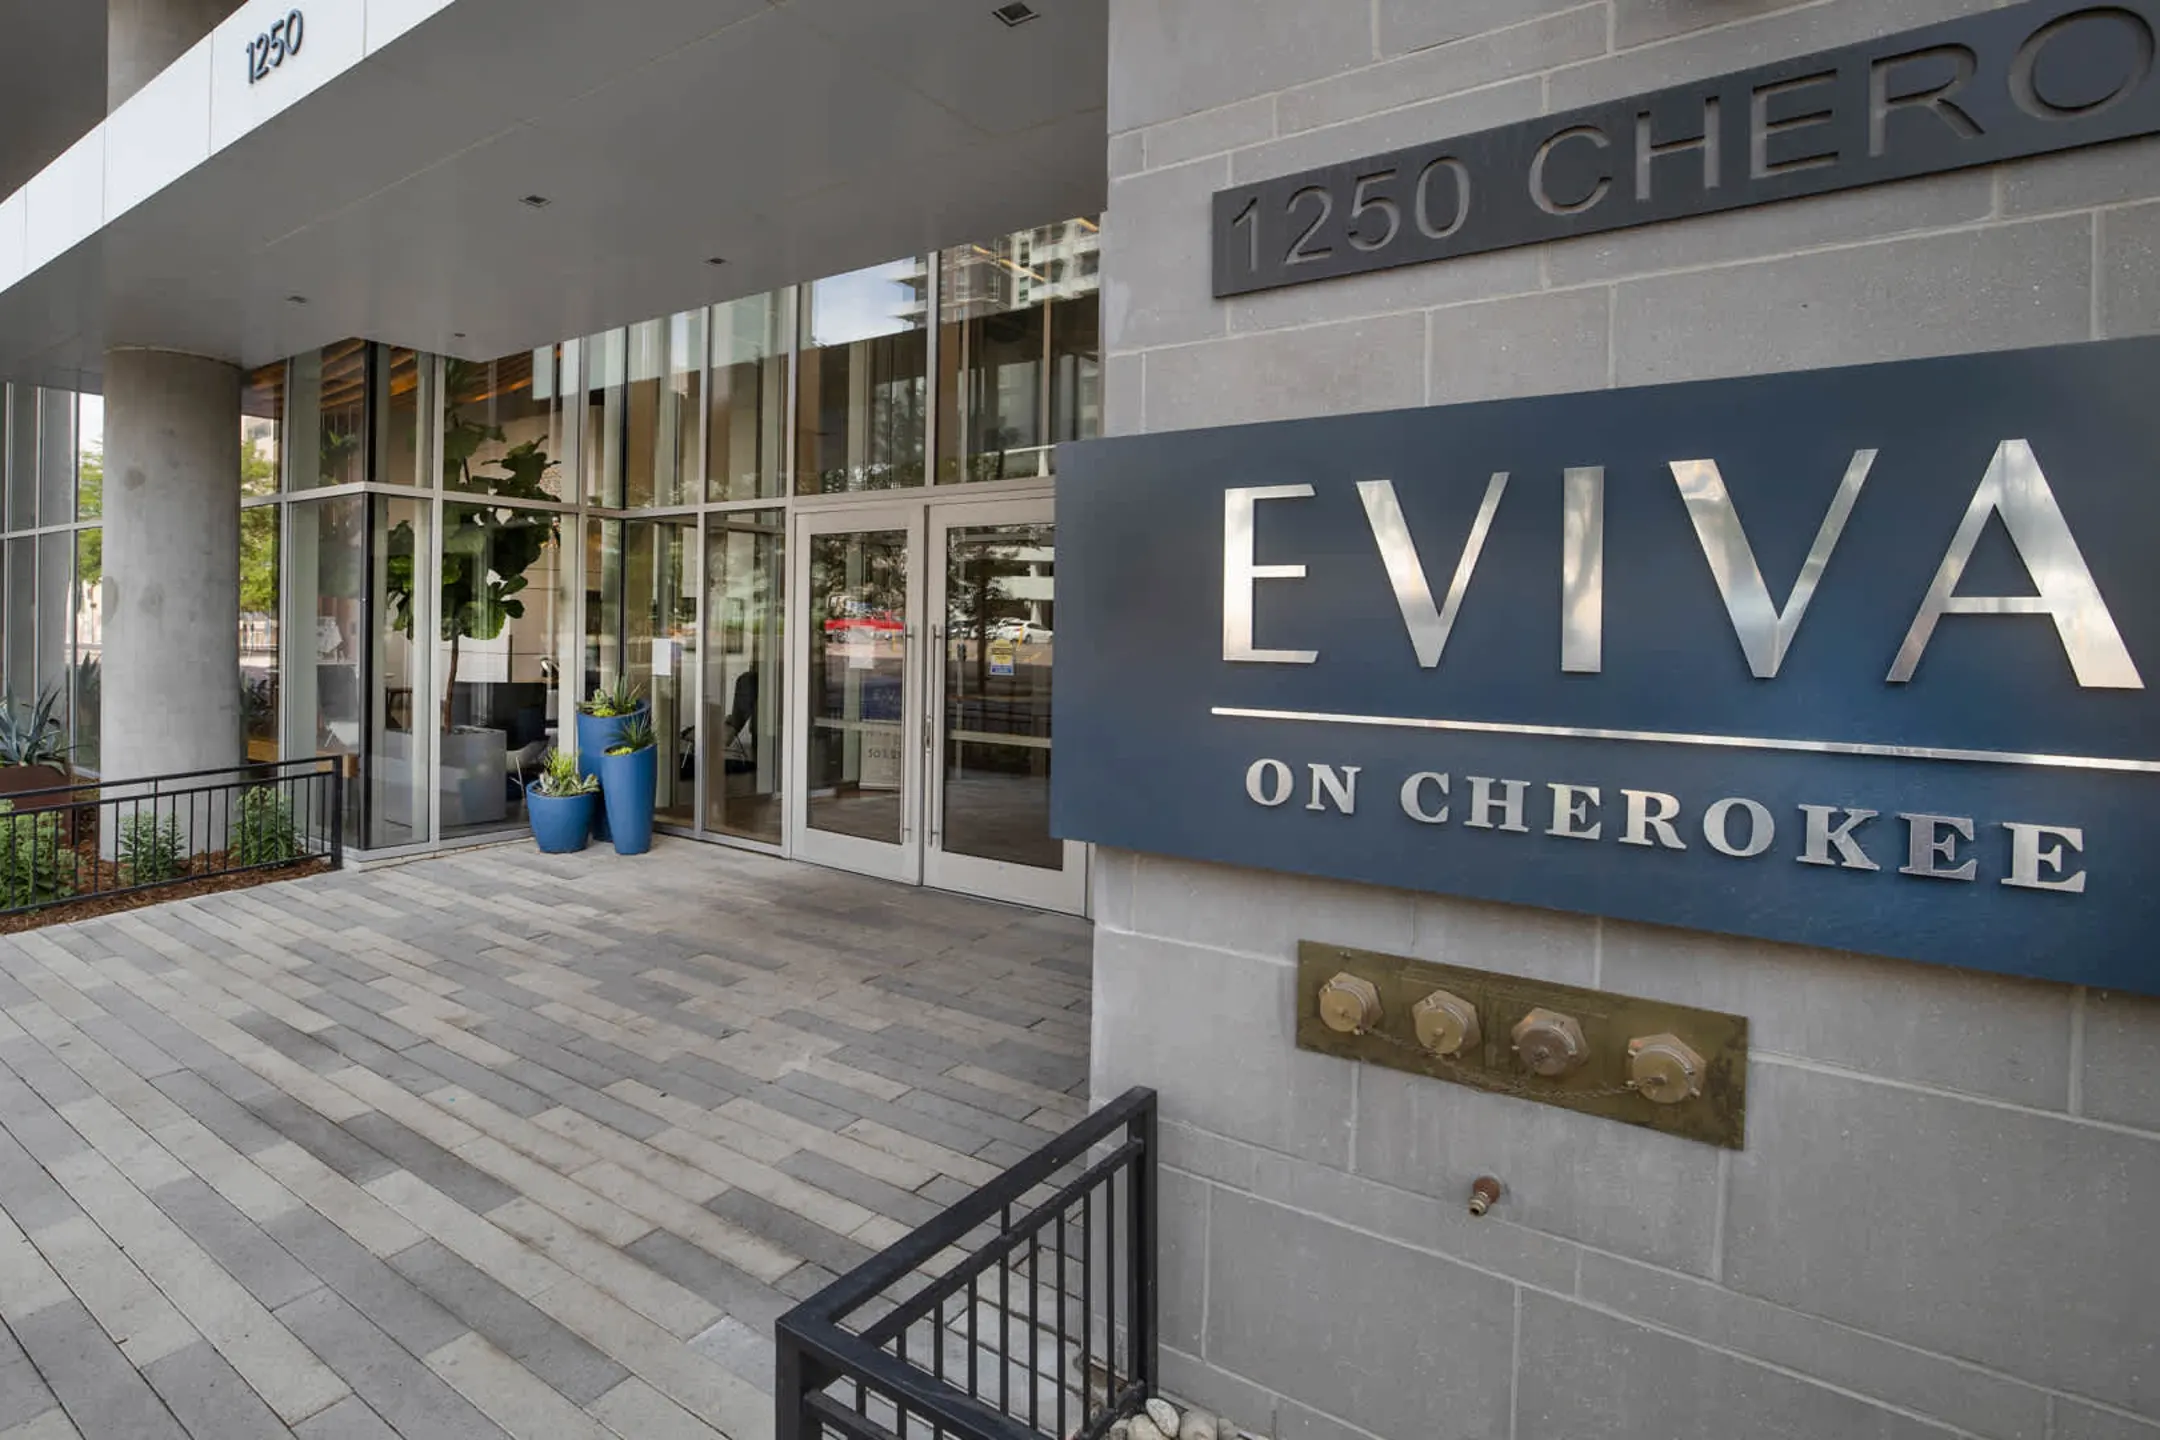 Community Signage - EVIVA On Cherokee - Denver, CO